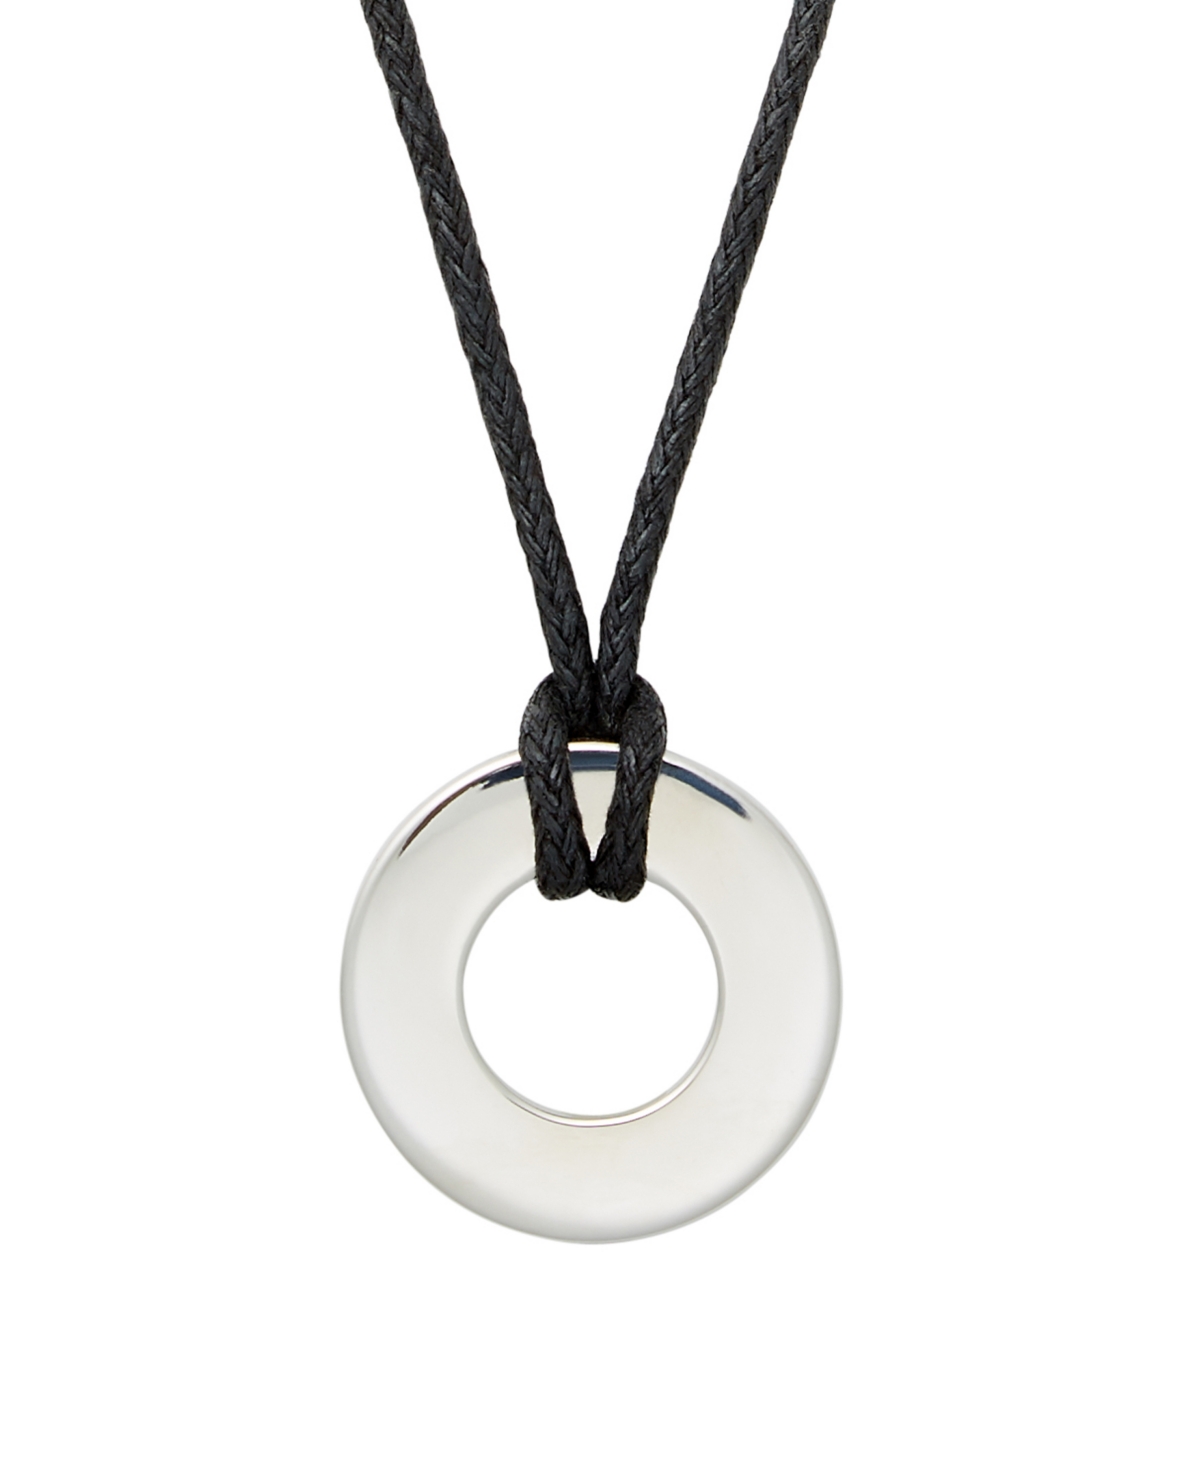 Eve's Jewelry Men's Black Cord Circle Pendant Necklace